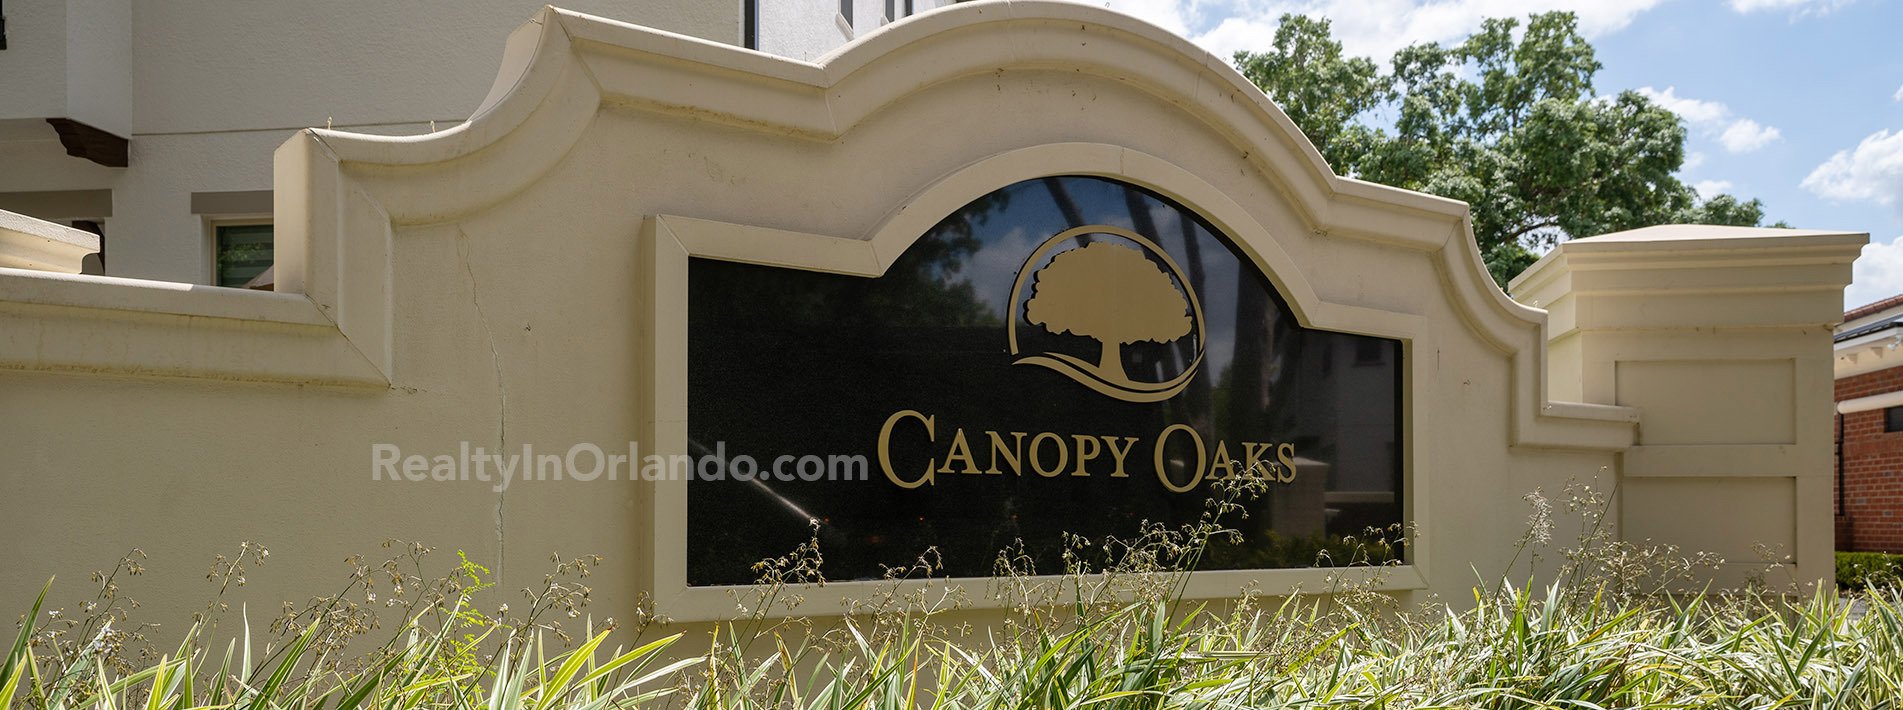 Canopy Oaks Winter Garden Real Estate